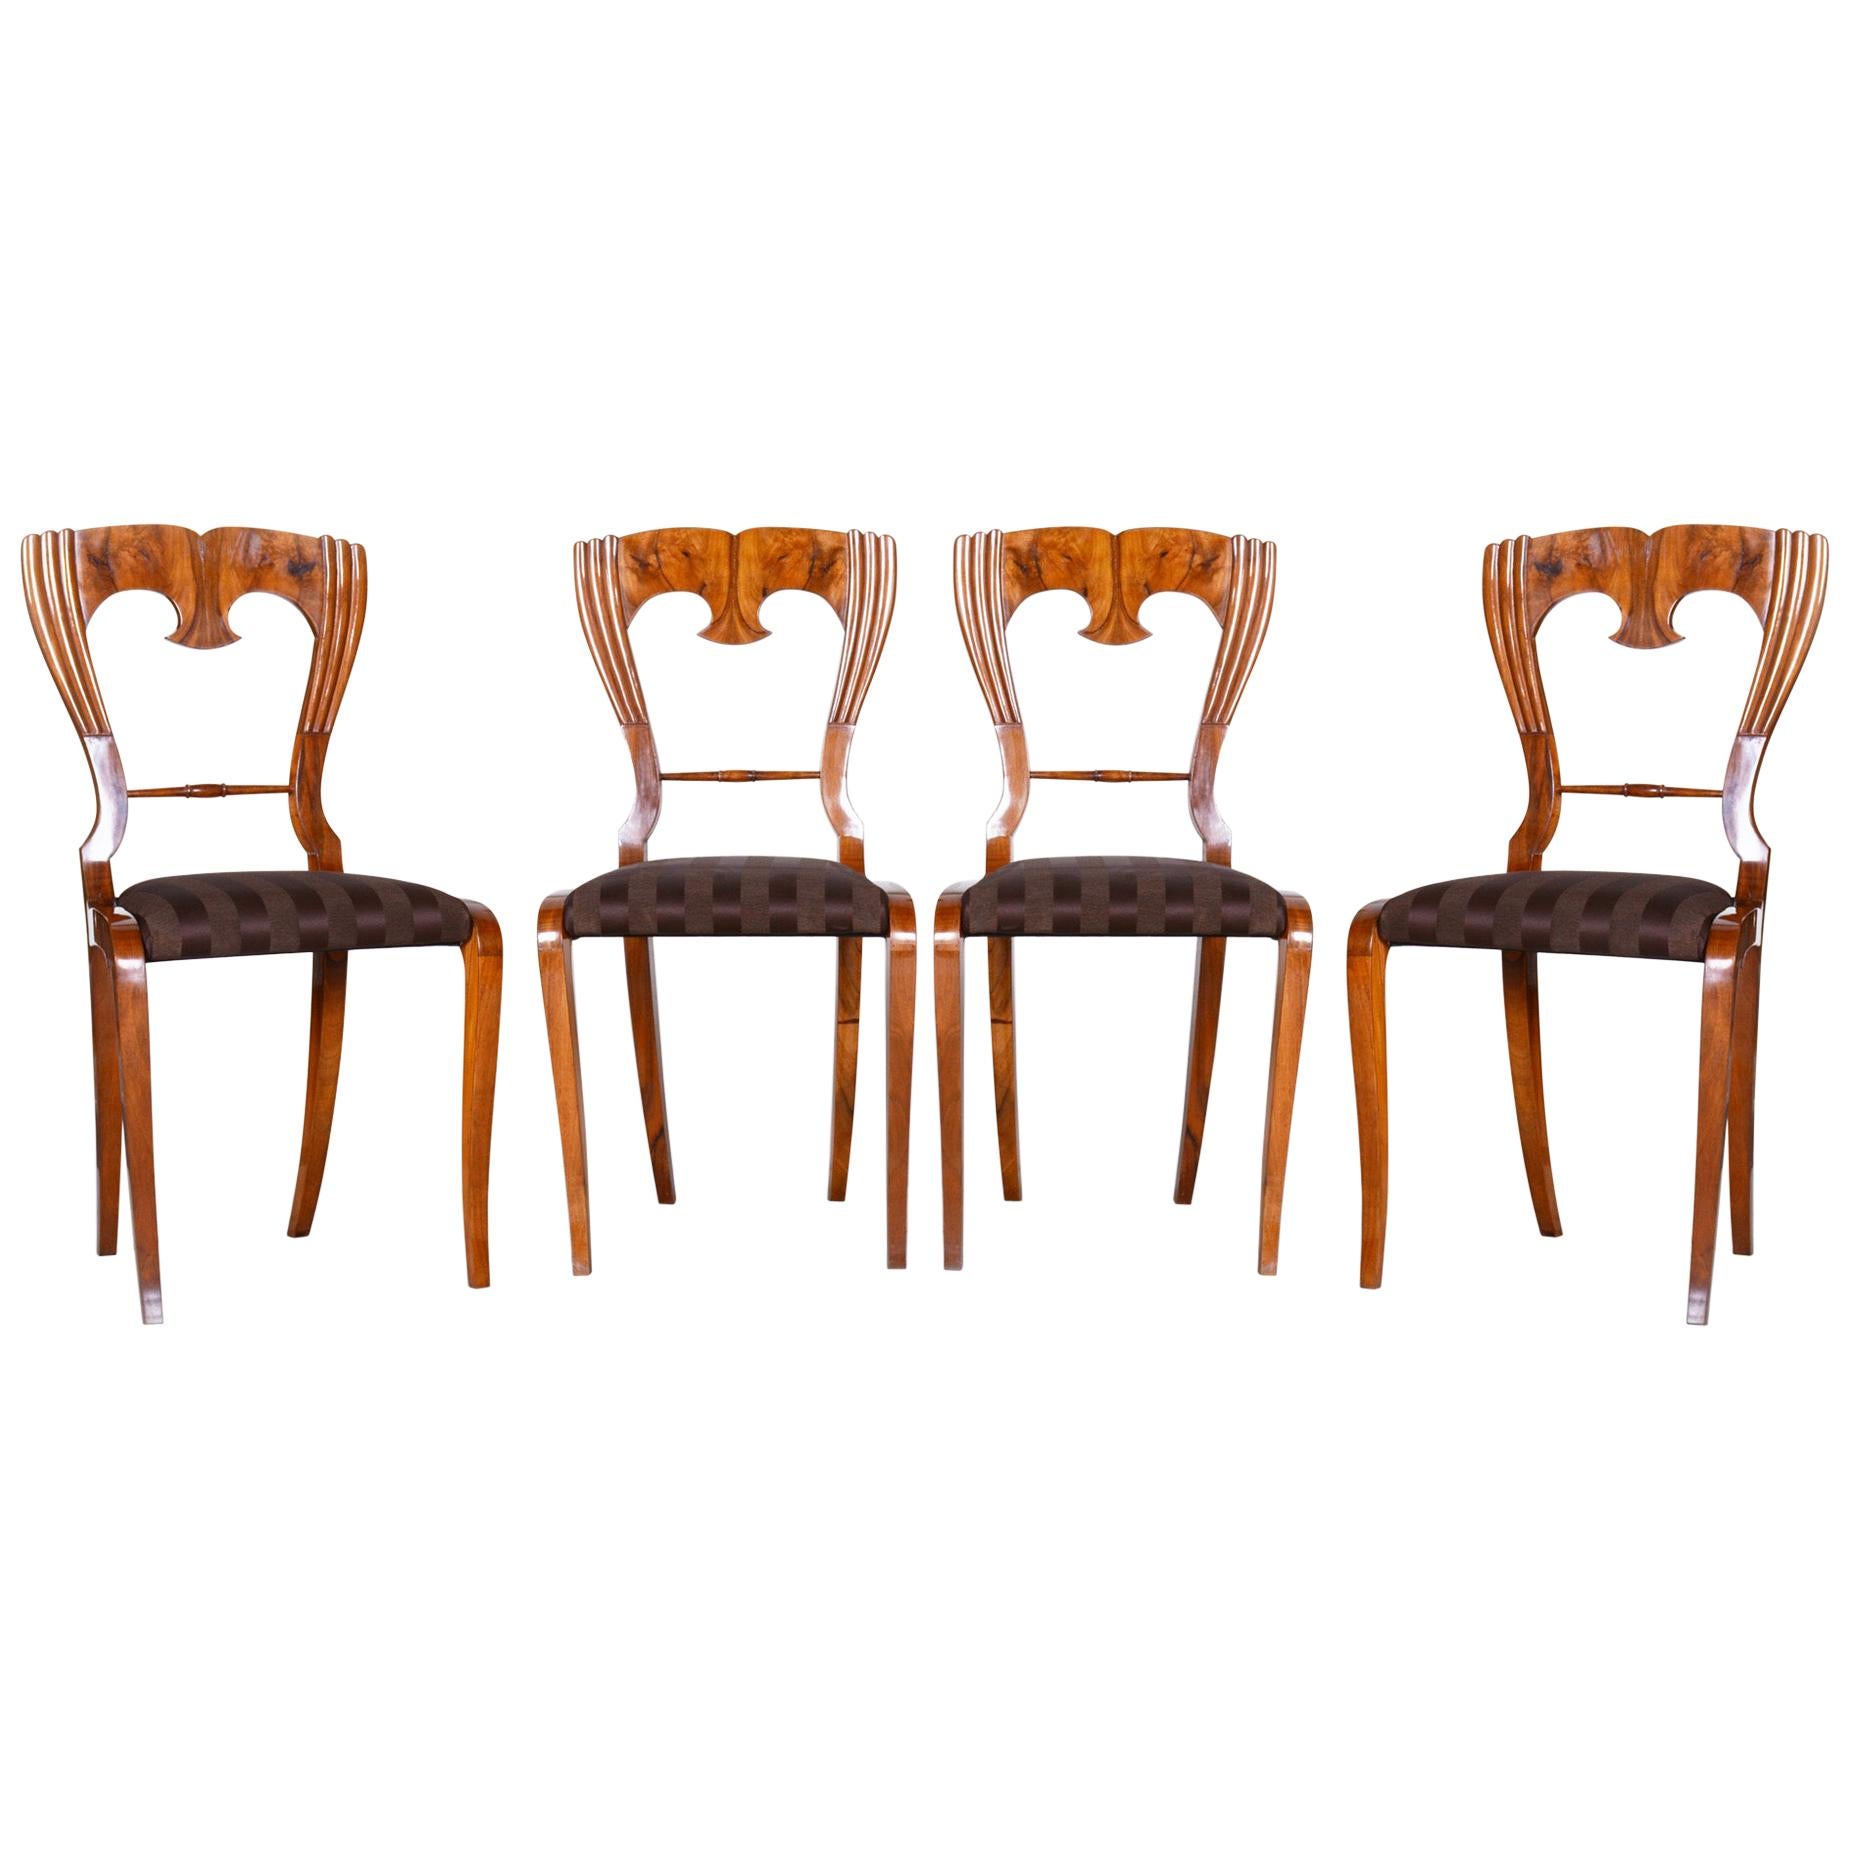 19th Century Walnut Czech Biedermeier Chairs Set of 4 Pieces, 1840-1849 For Sale